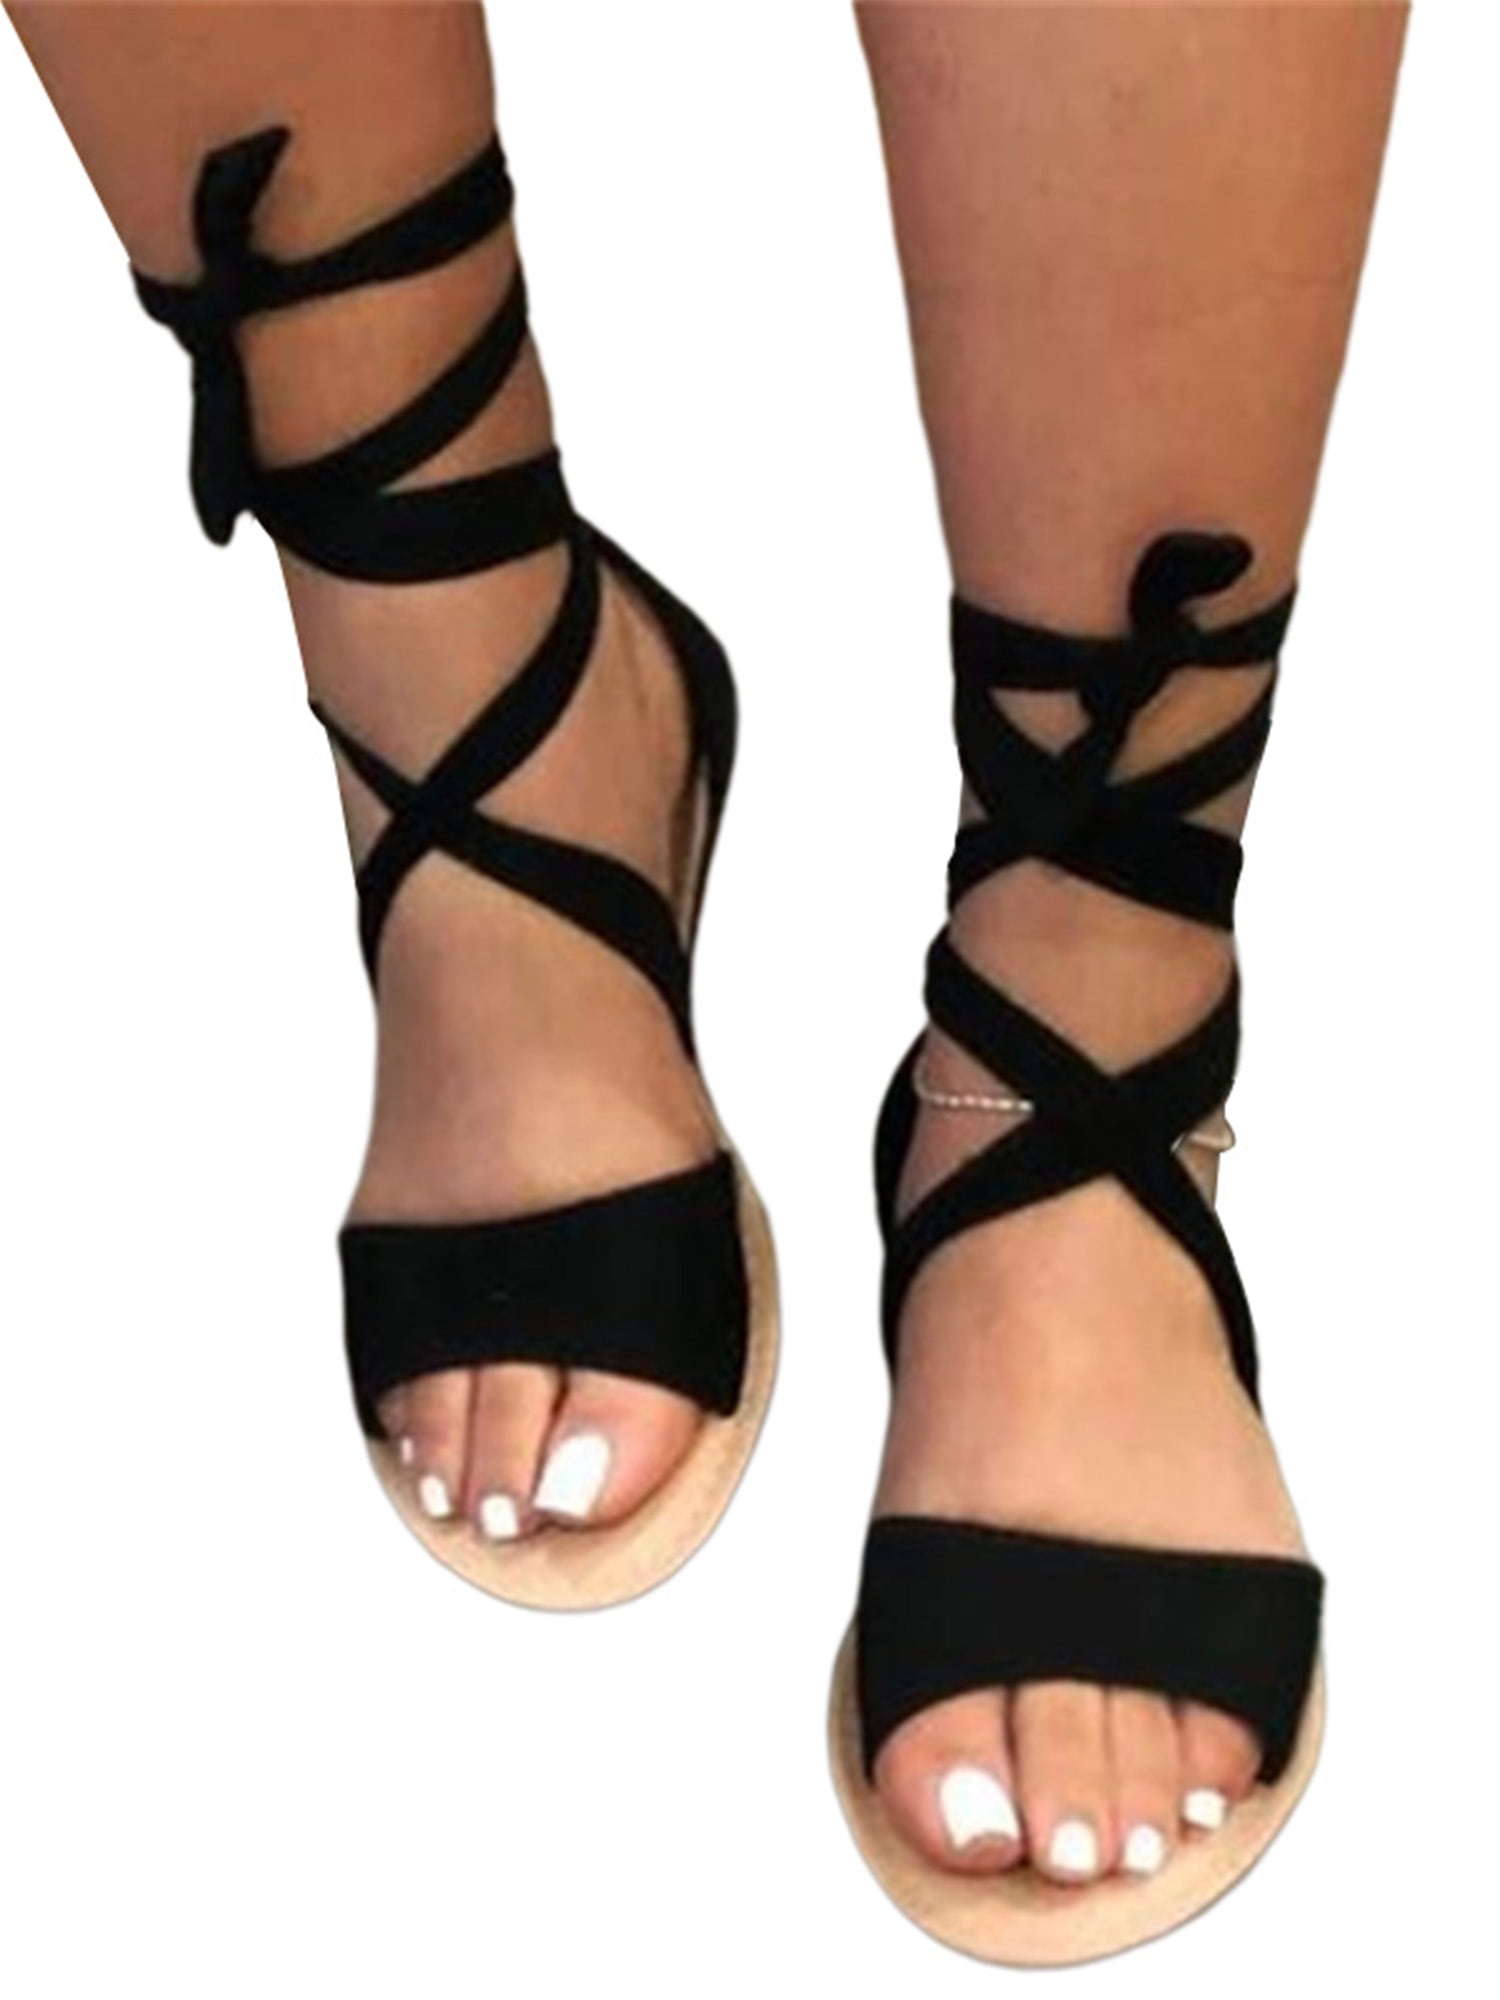 haoricu Wedge Sandals for Women Dressy Summer Low Heel Women's Gladiator Sandals Open Toe Ankle Strappy Beach Sandals 